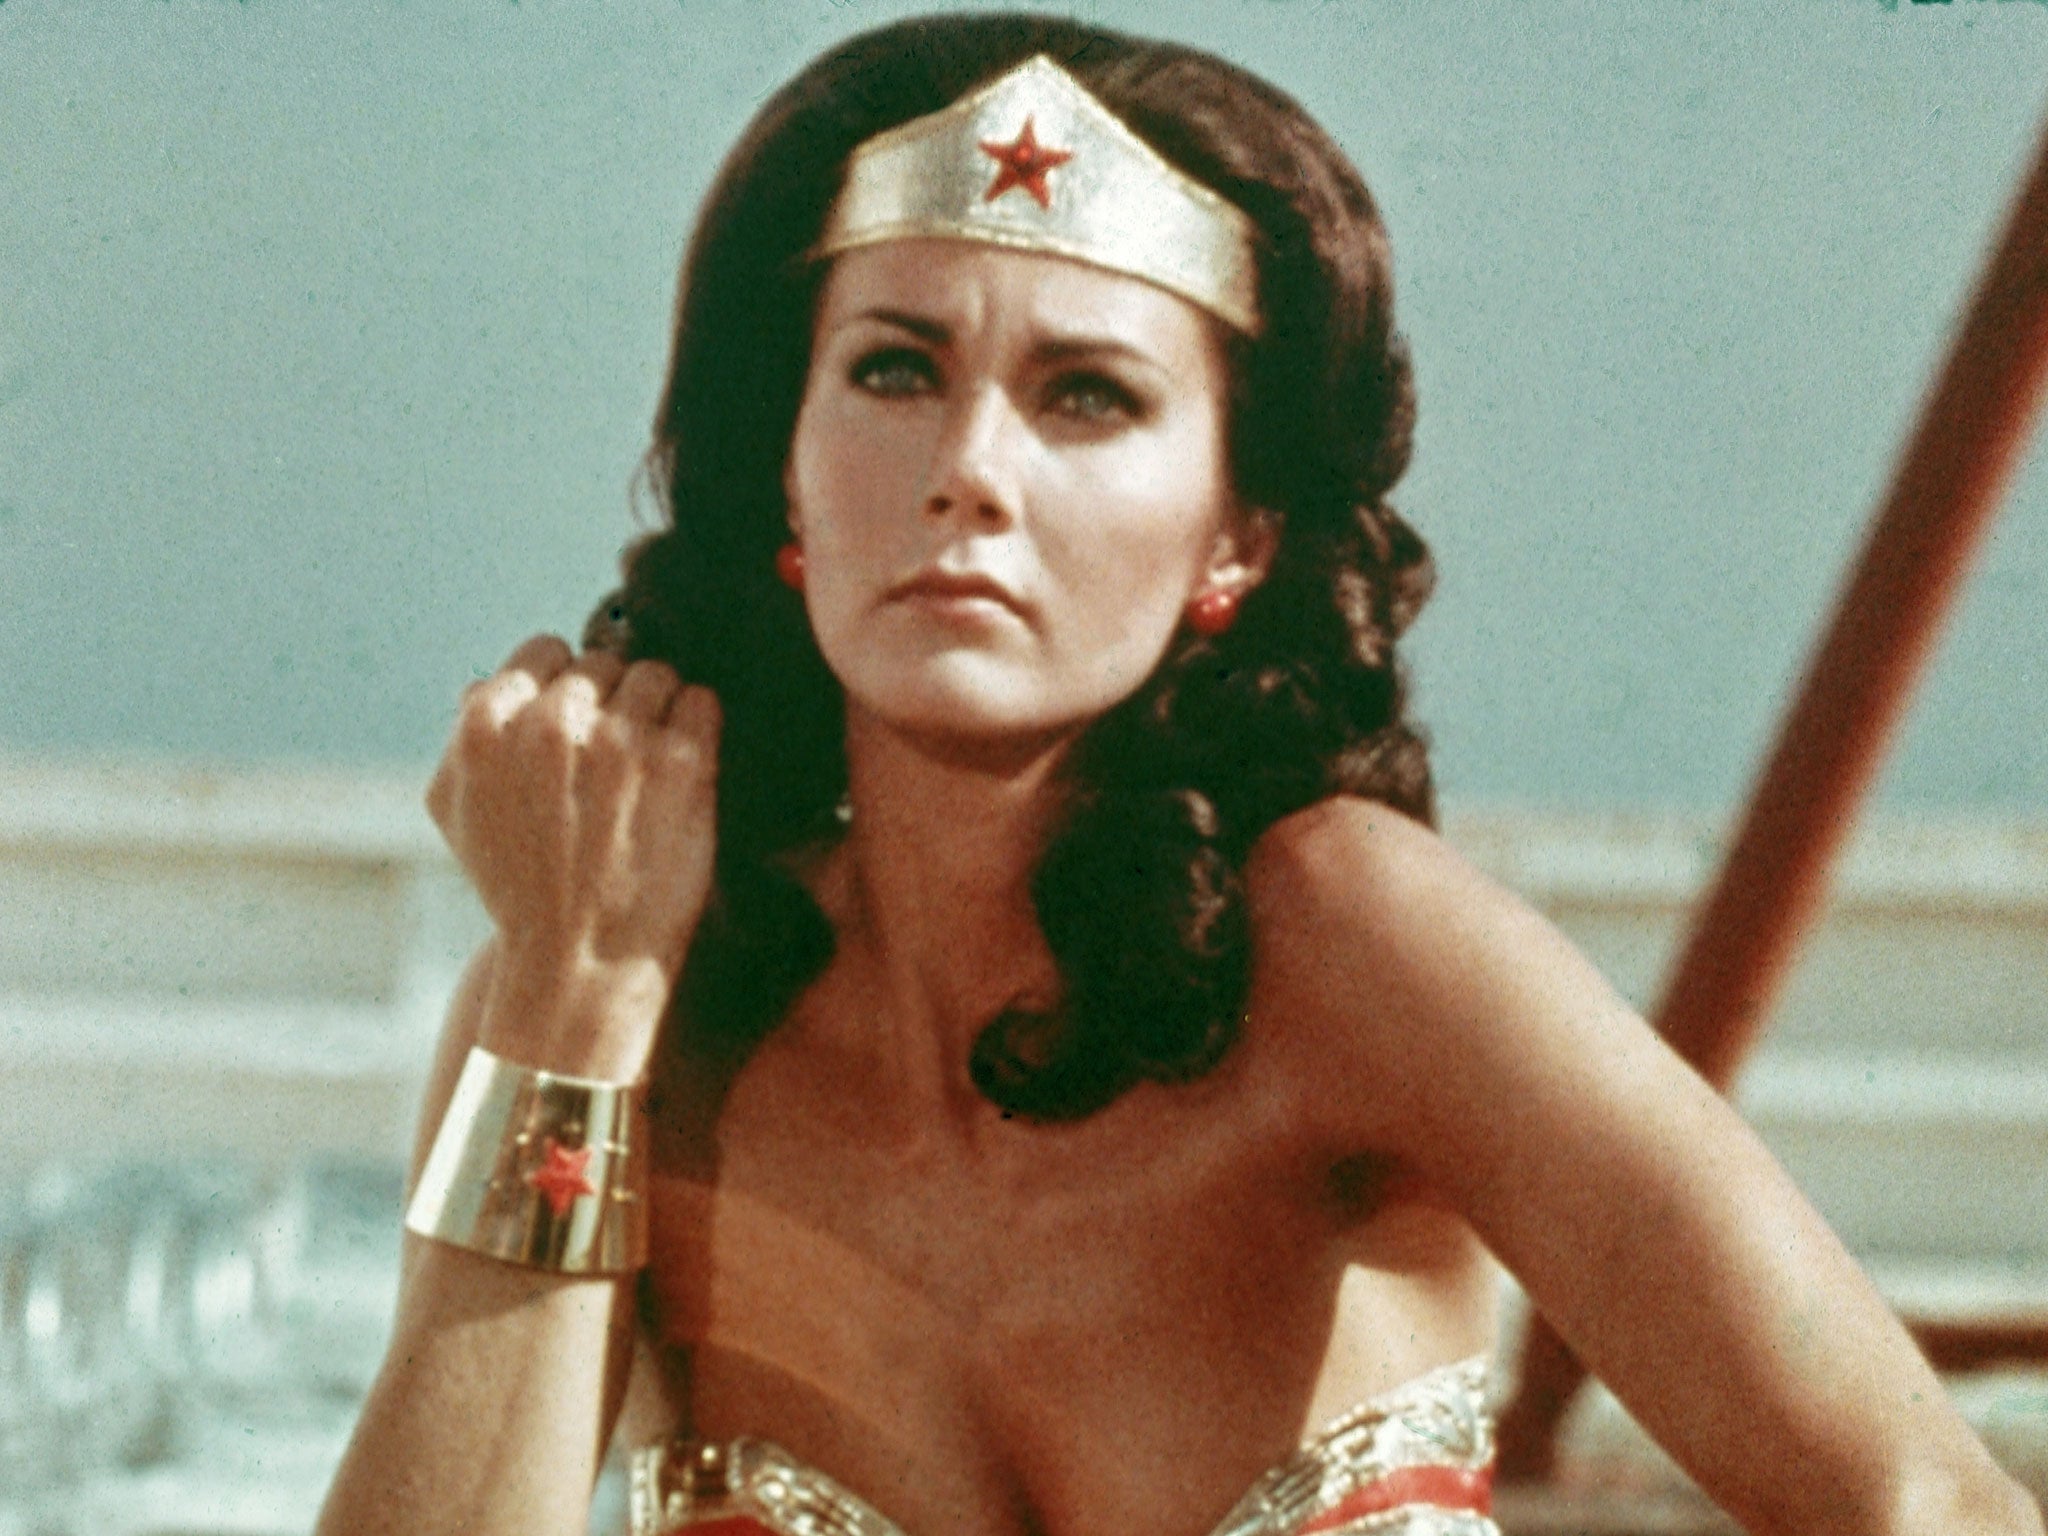 The new sisterhood?: Wonder Woman was played by Lynda Carter in the TV series